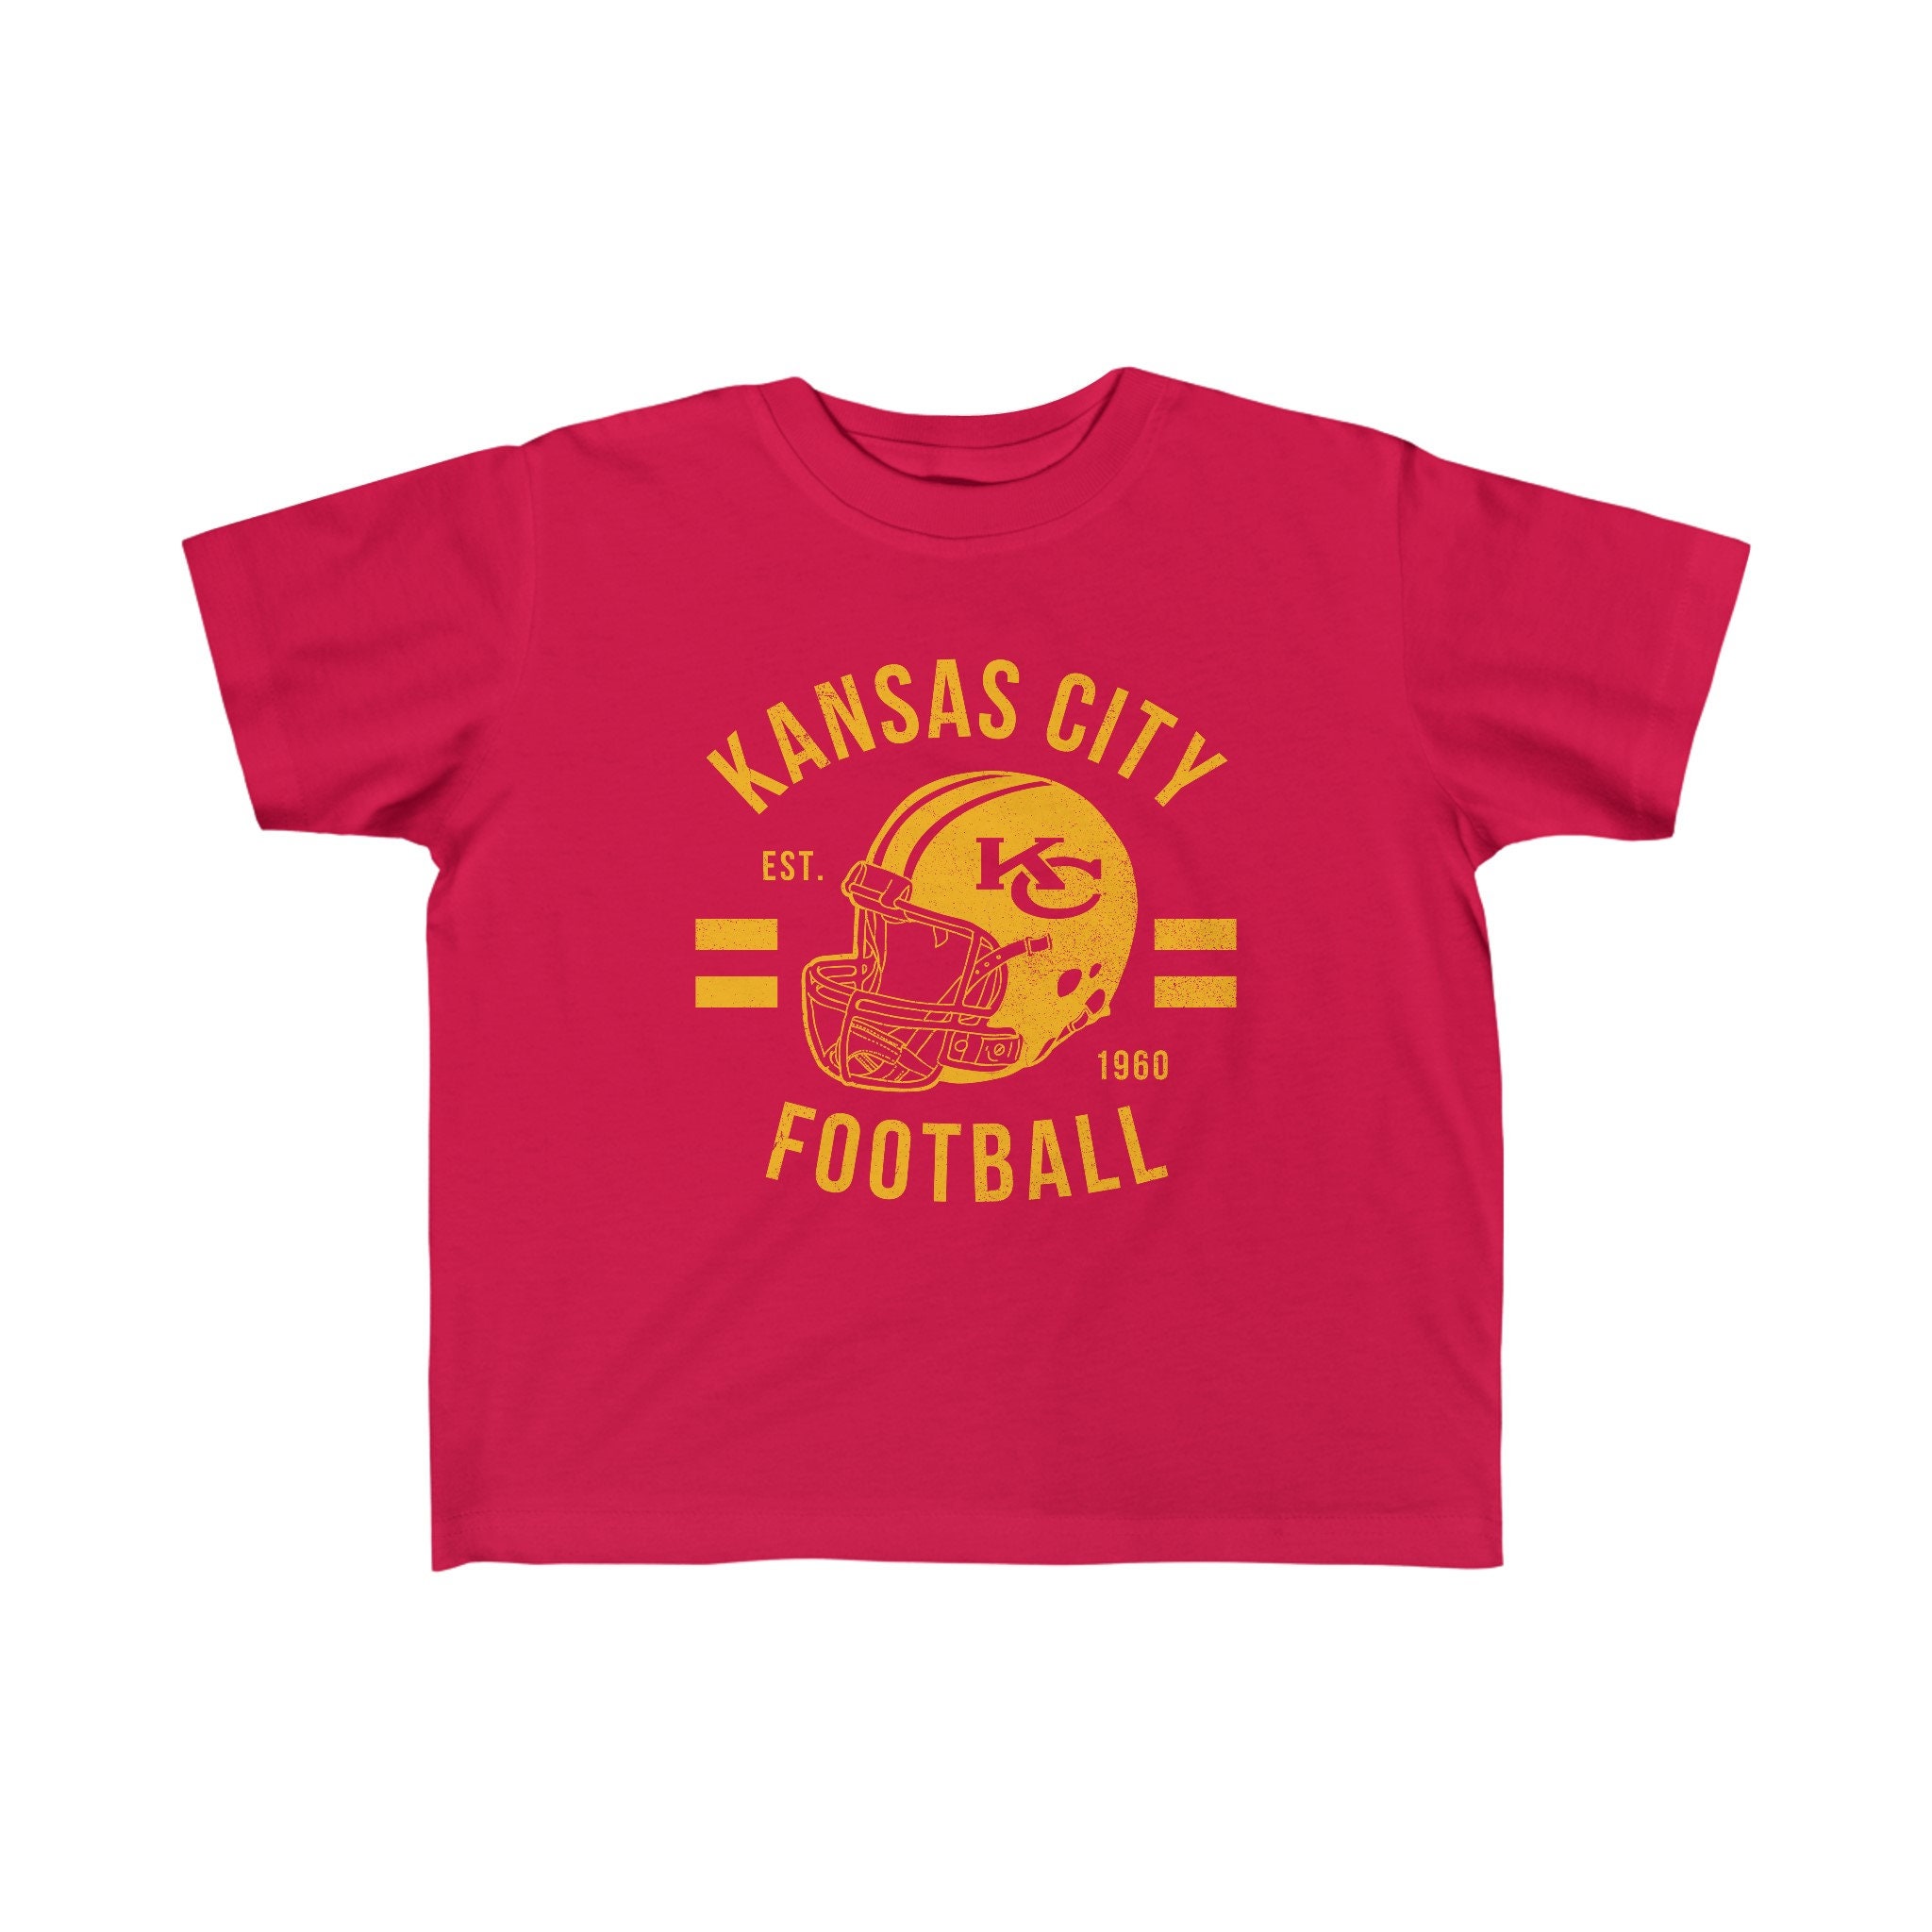 Kansas City MO Football est 1960 T-SHIRT' Men's Premium T-Shirt